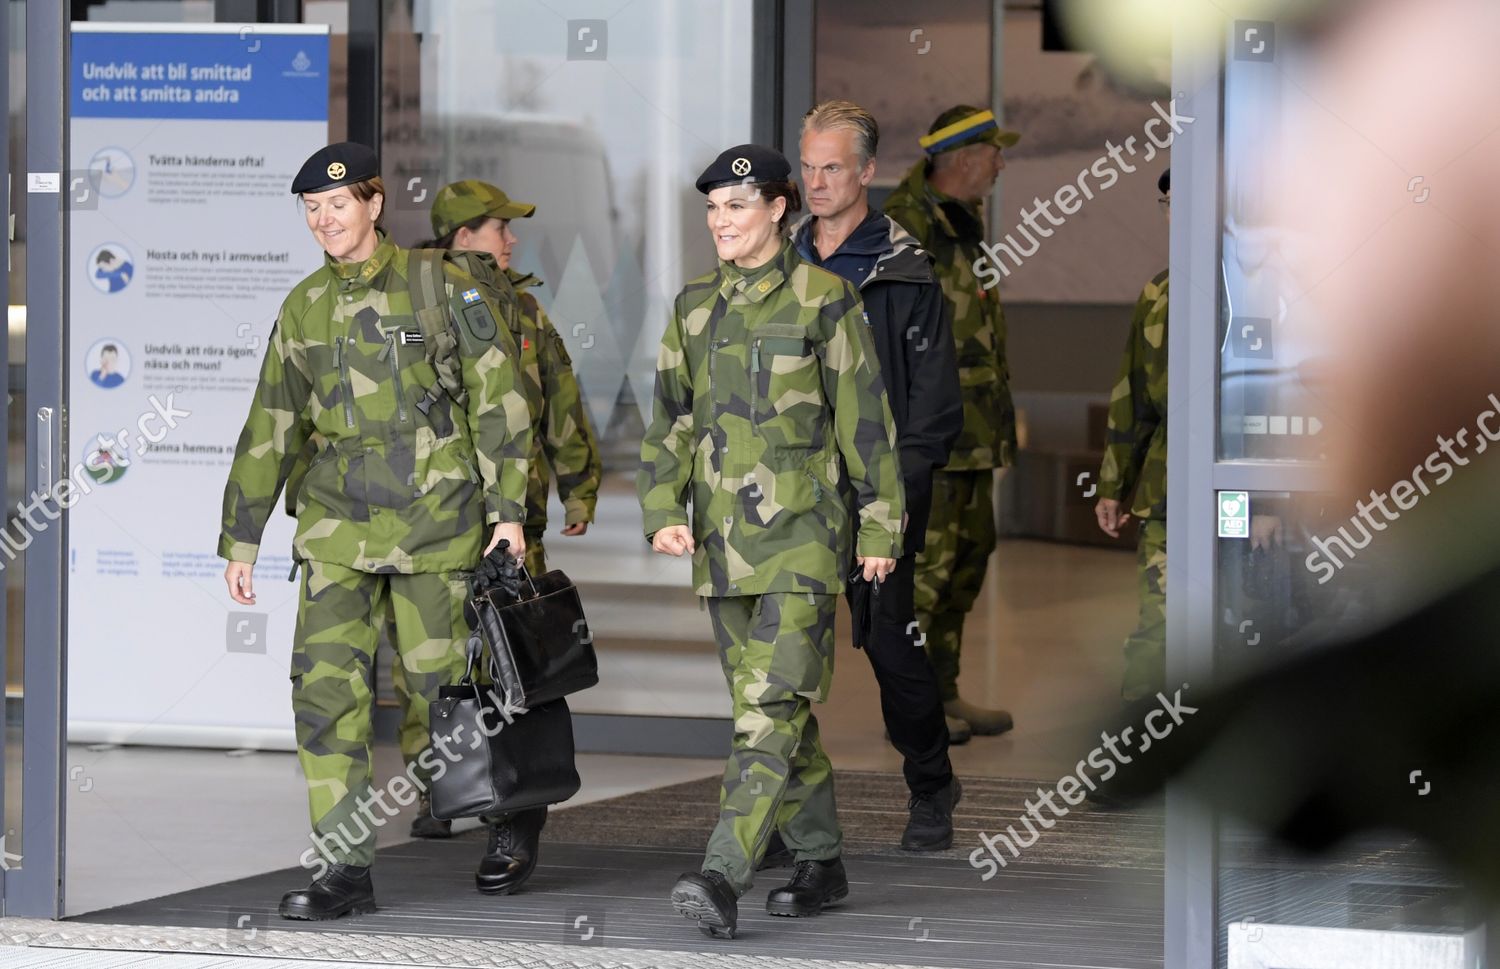 crown-princess-victoria-visits-the-swedish-home-guard-salenfjallen-sweden-shutterstock-editorial-12502339r.jpg